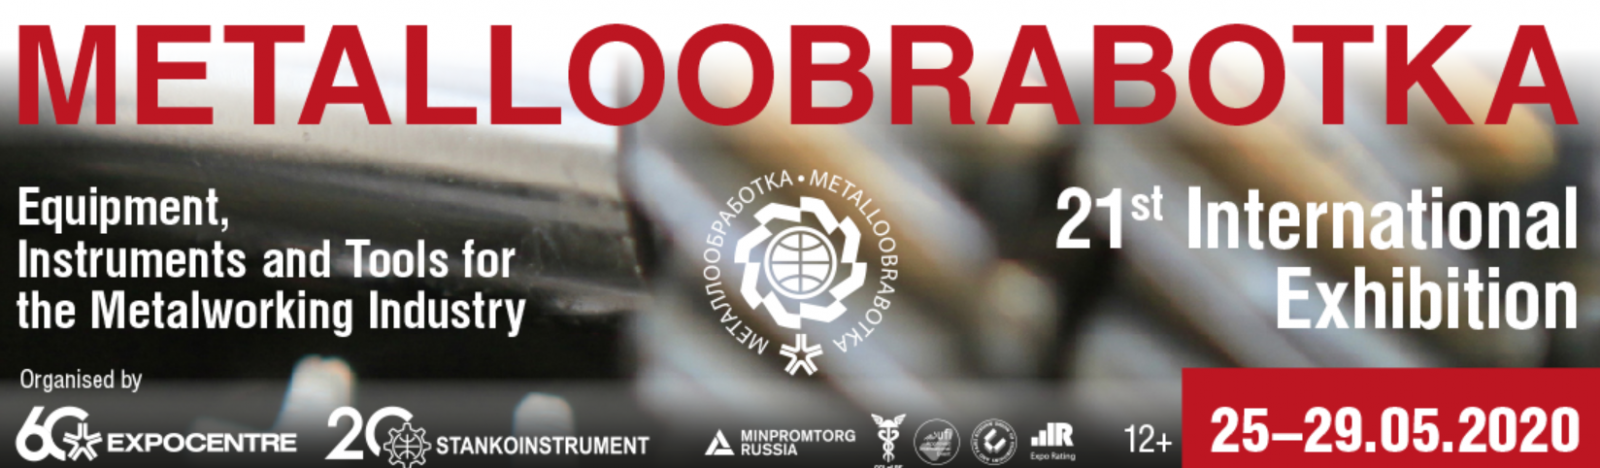 metall cuting fair in russia metalloobrabotka 2020 moscow